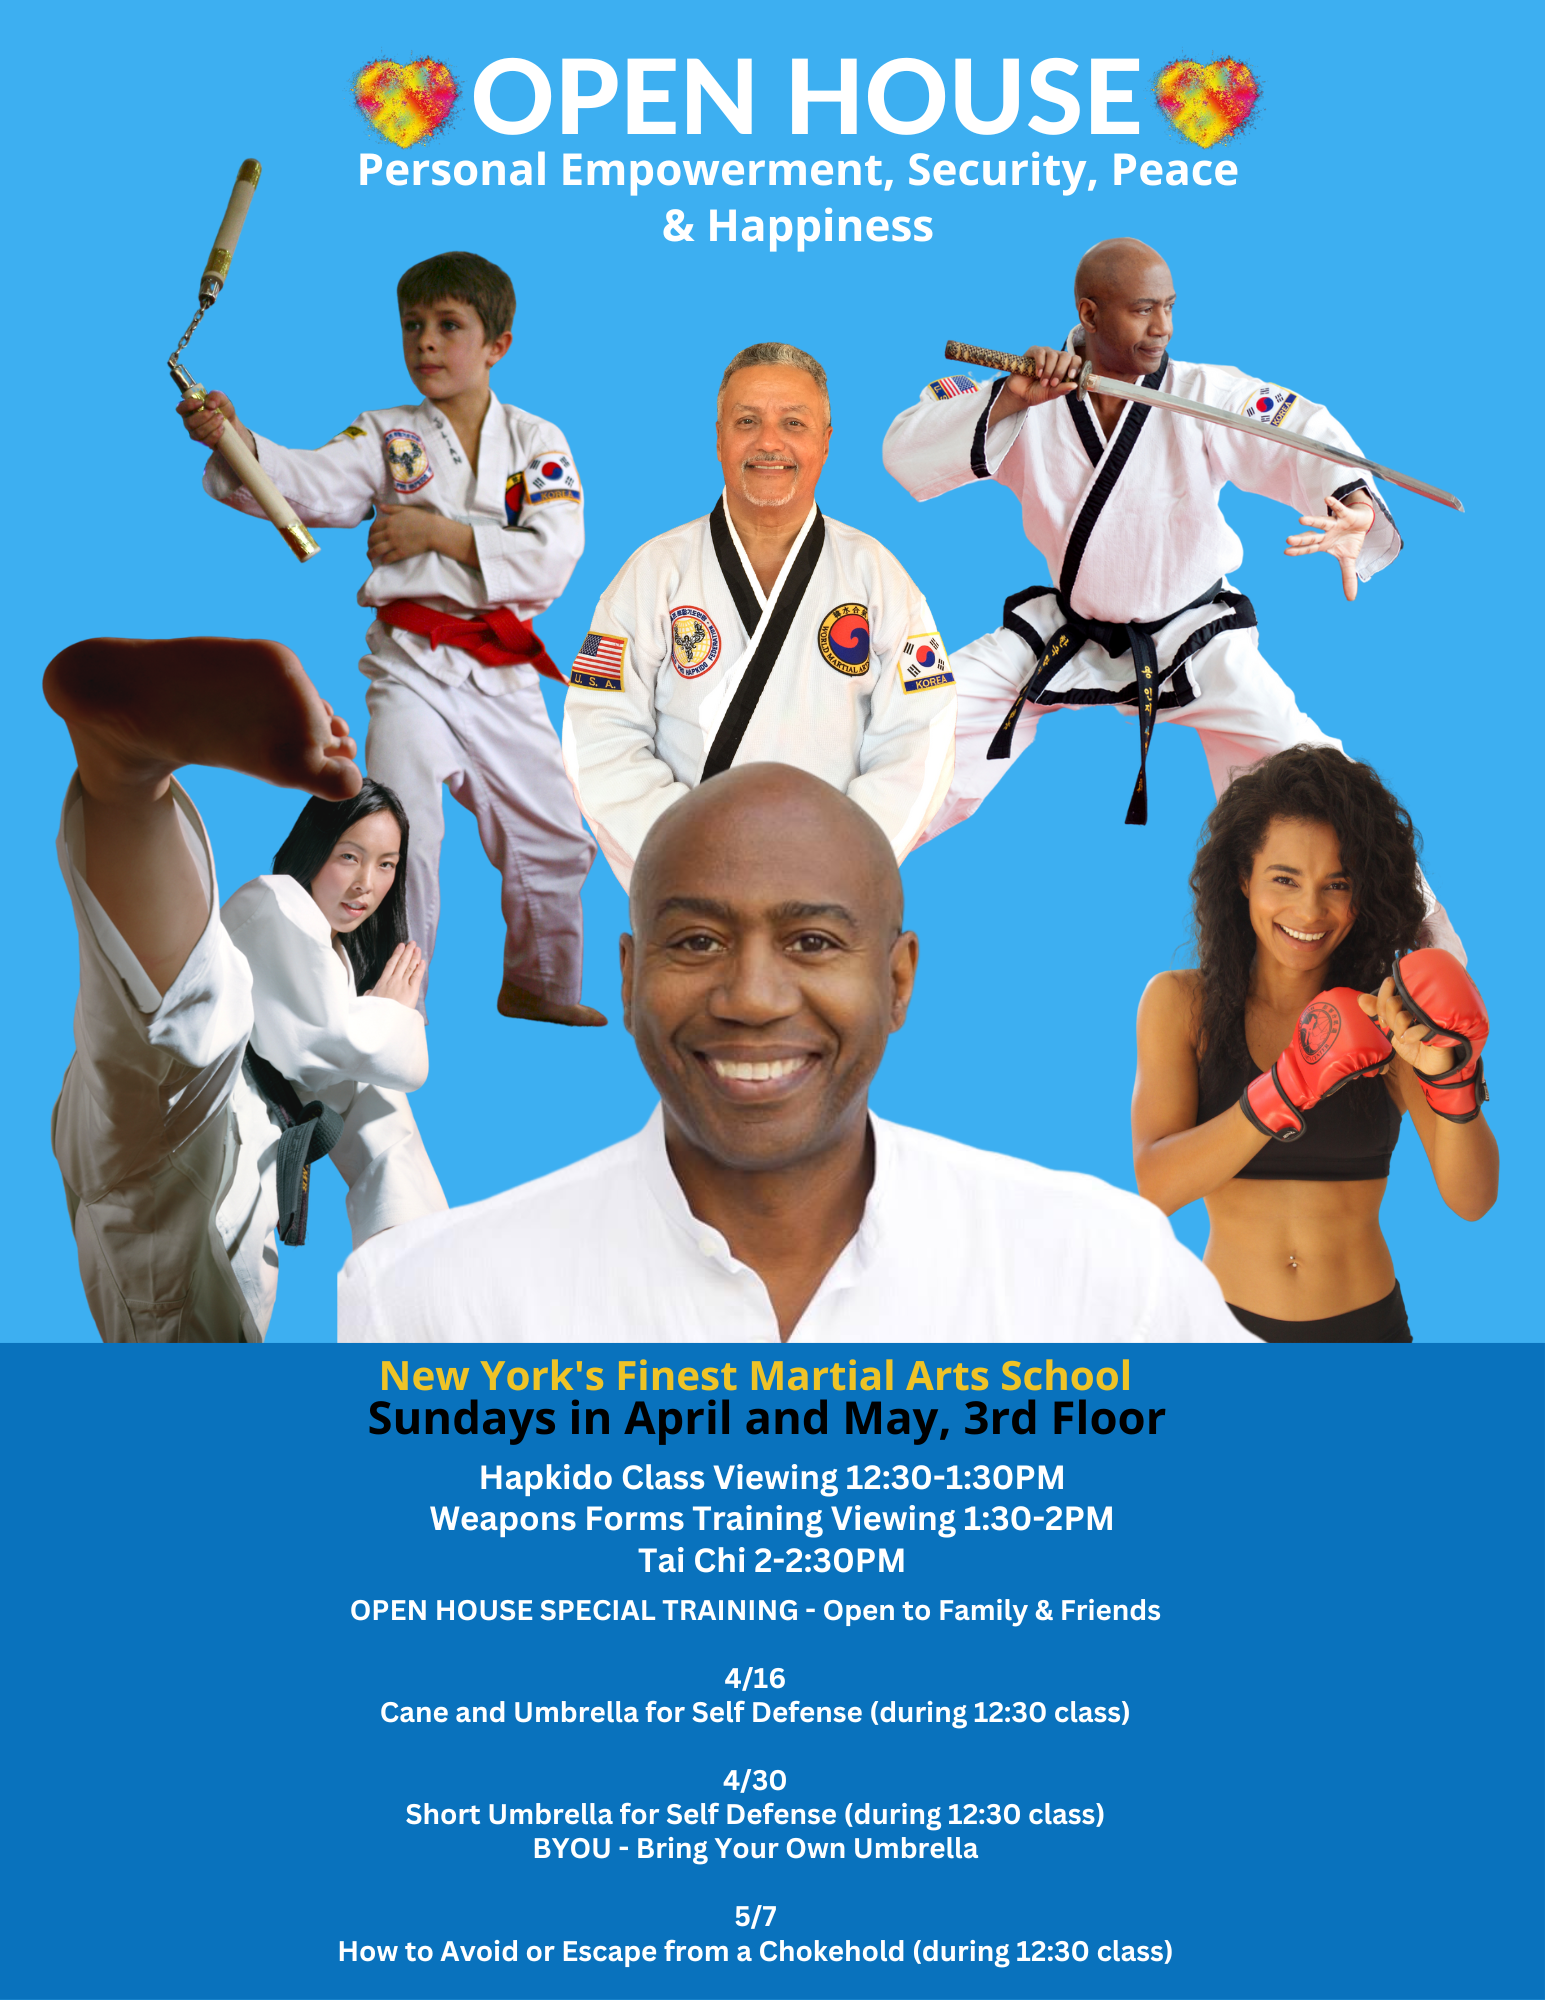 5 martial arts training good for self-defense